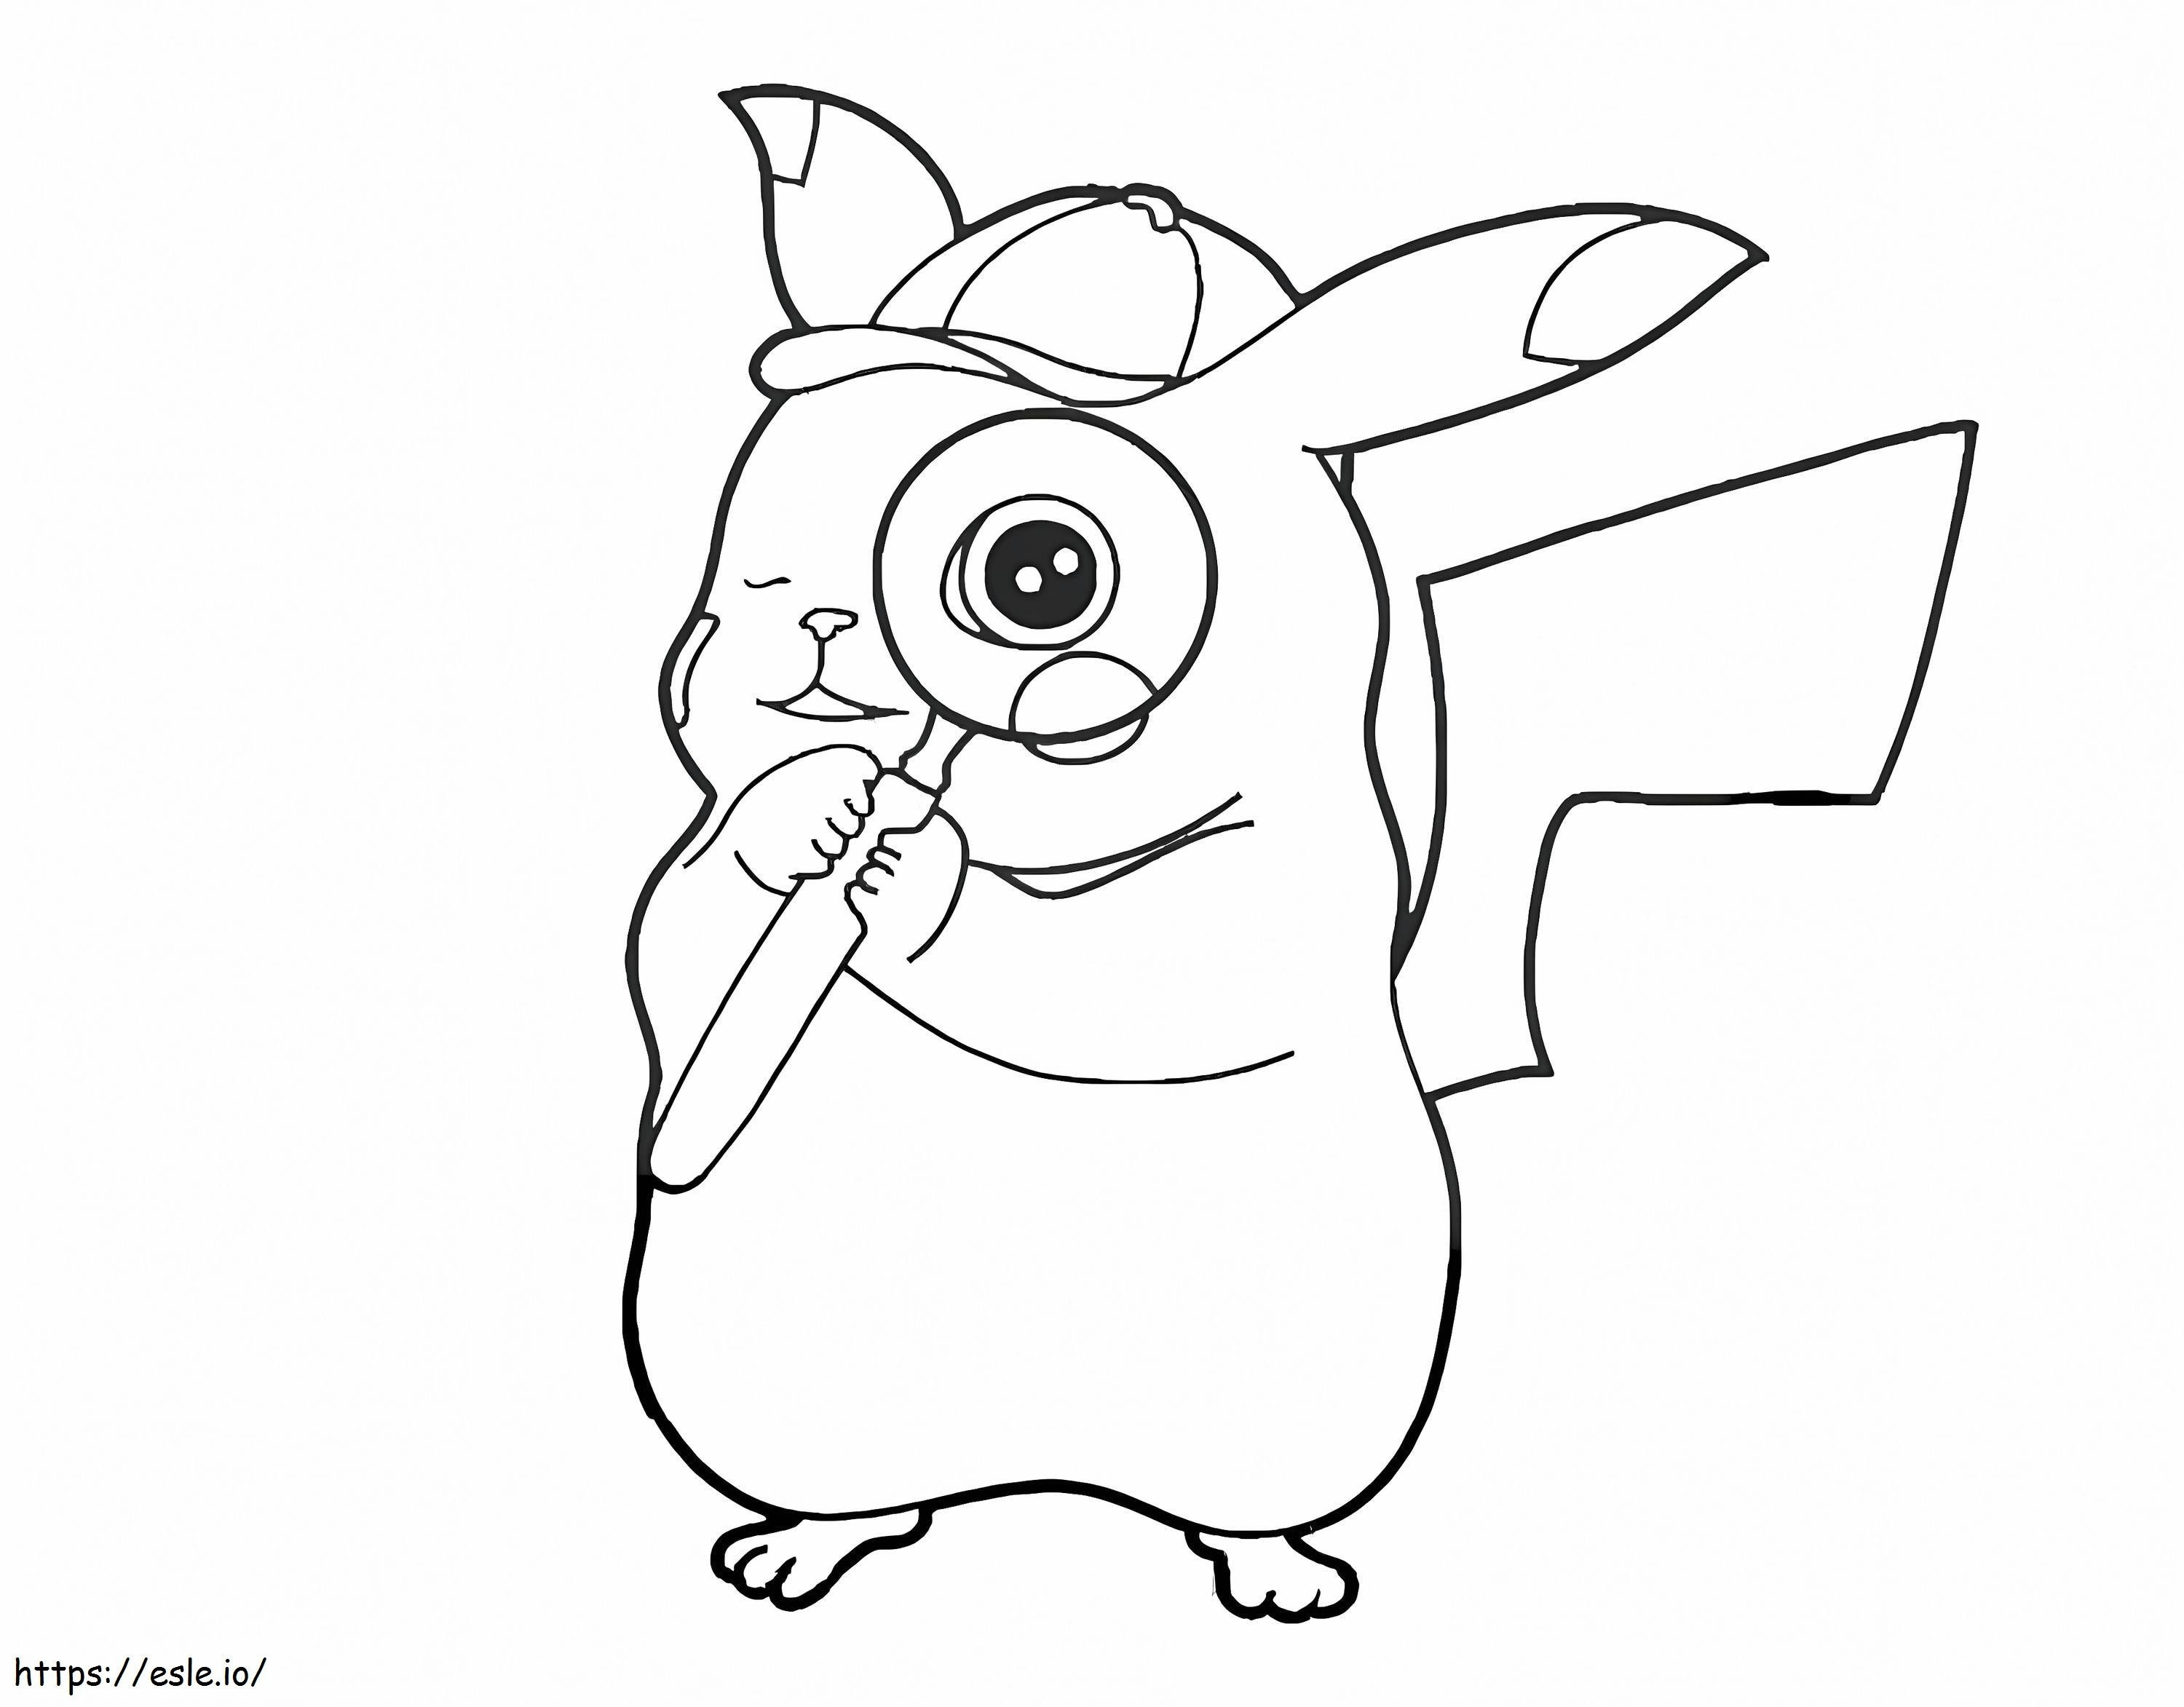 Detective Pikachu coloring page